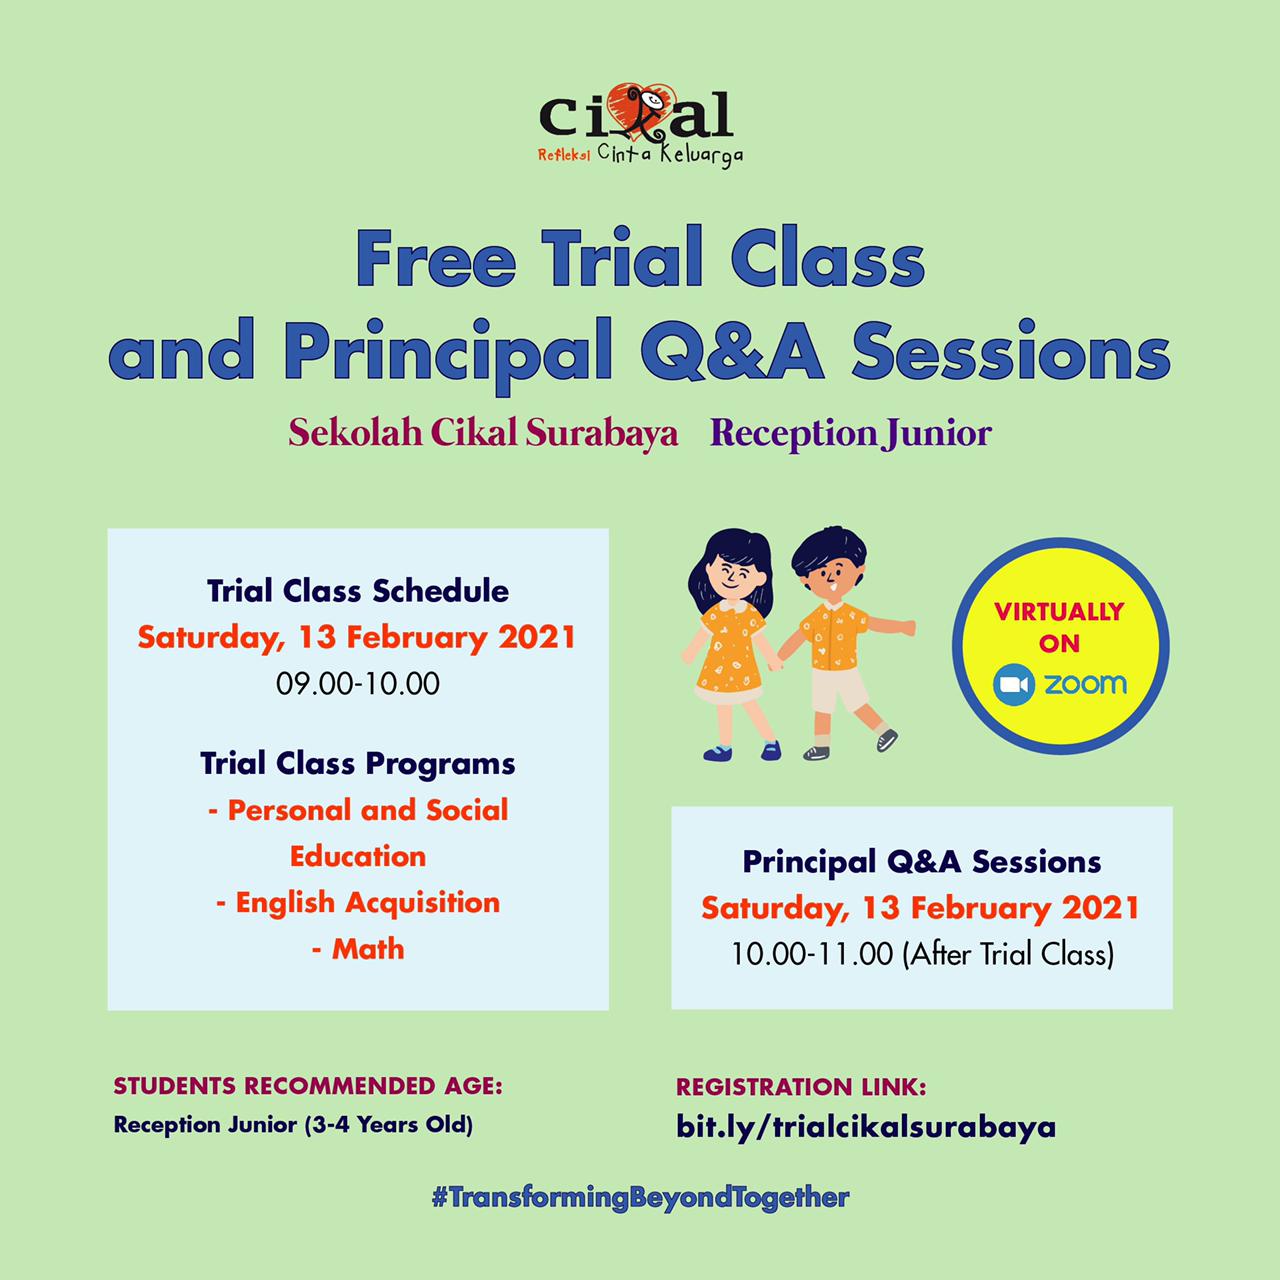 FREE TRIAL CLASS AND Q&A SESSIONS SEKOLAH CIKAL SURABAYA